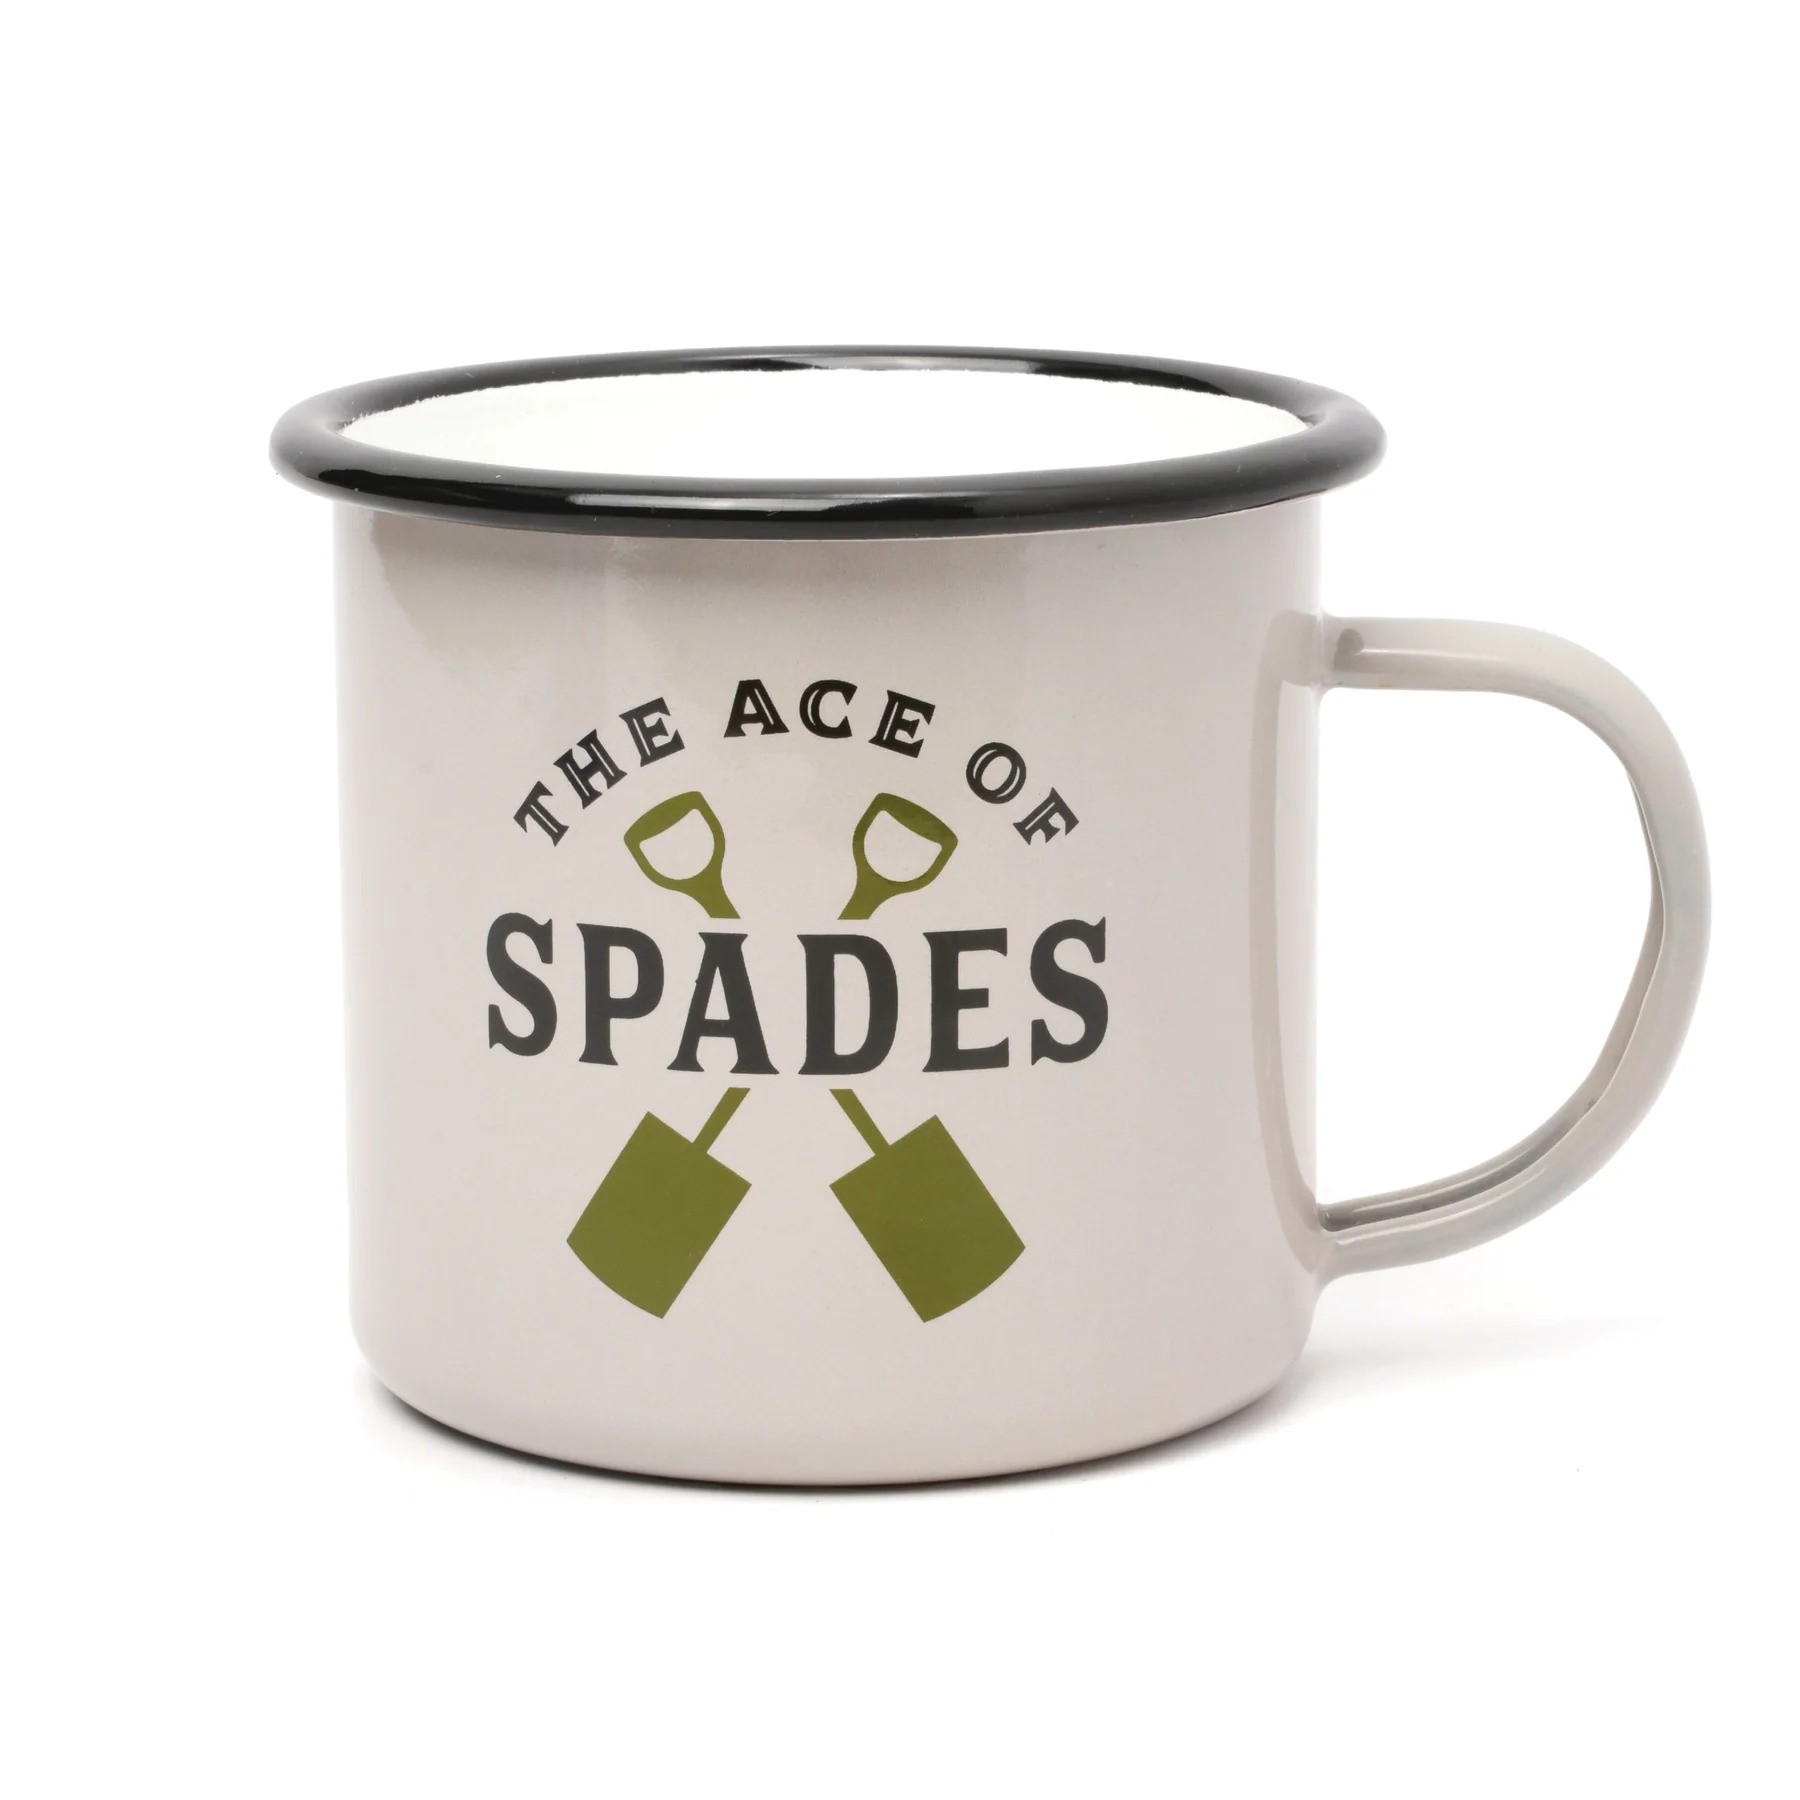 Gentlemans Hardware 'Ace of Spades' Enamel Mug